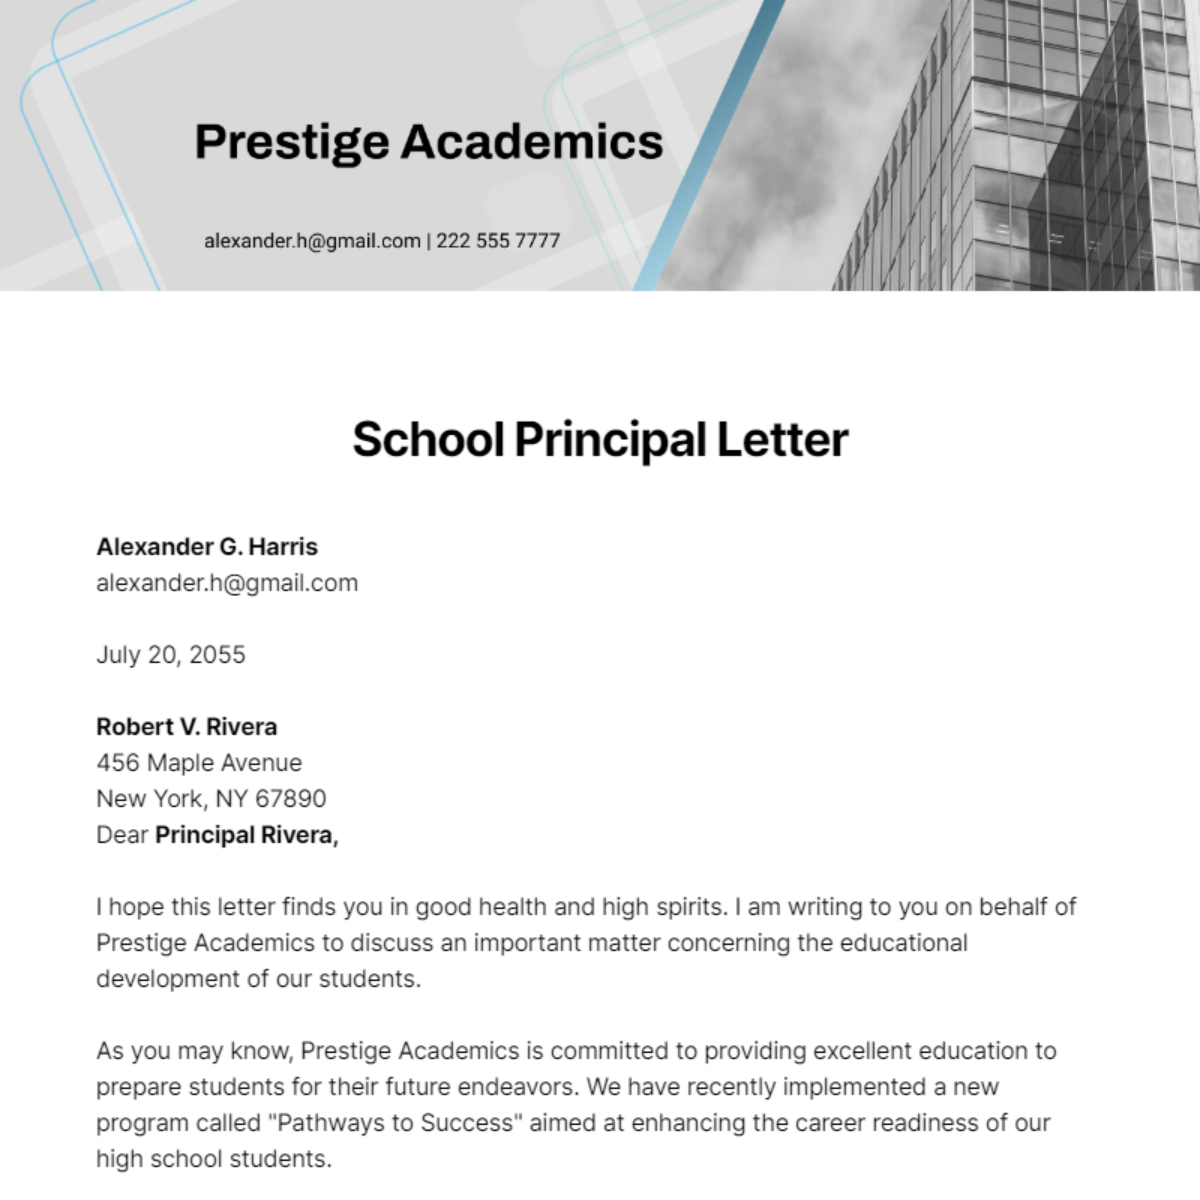 School Principal Letter   Template